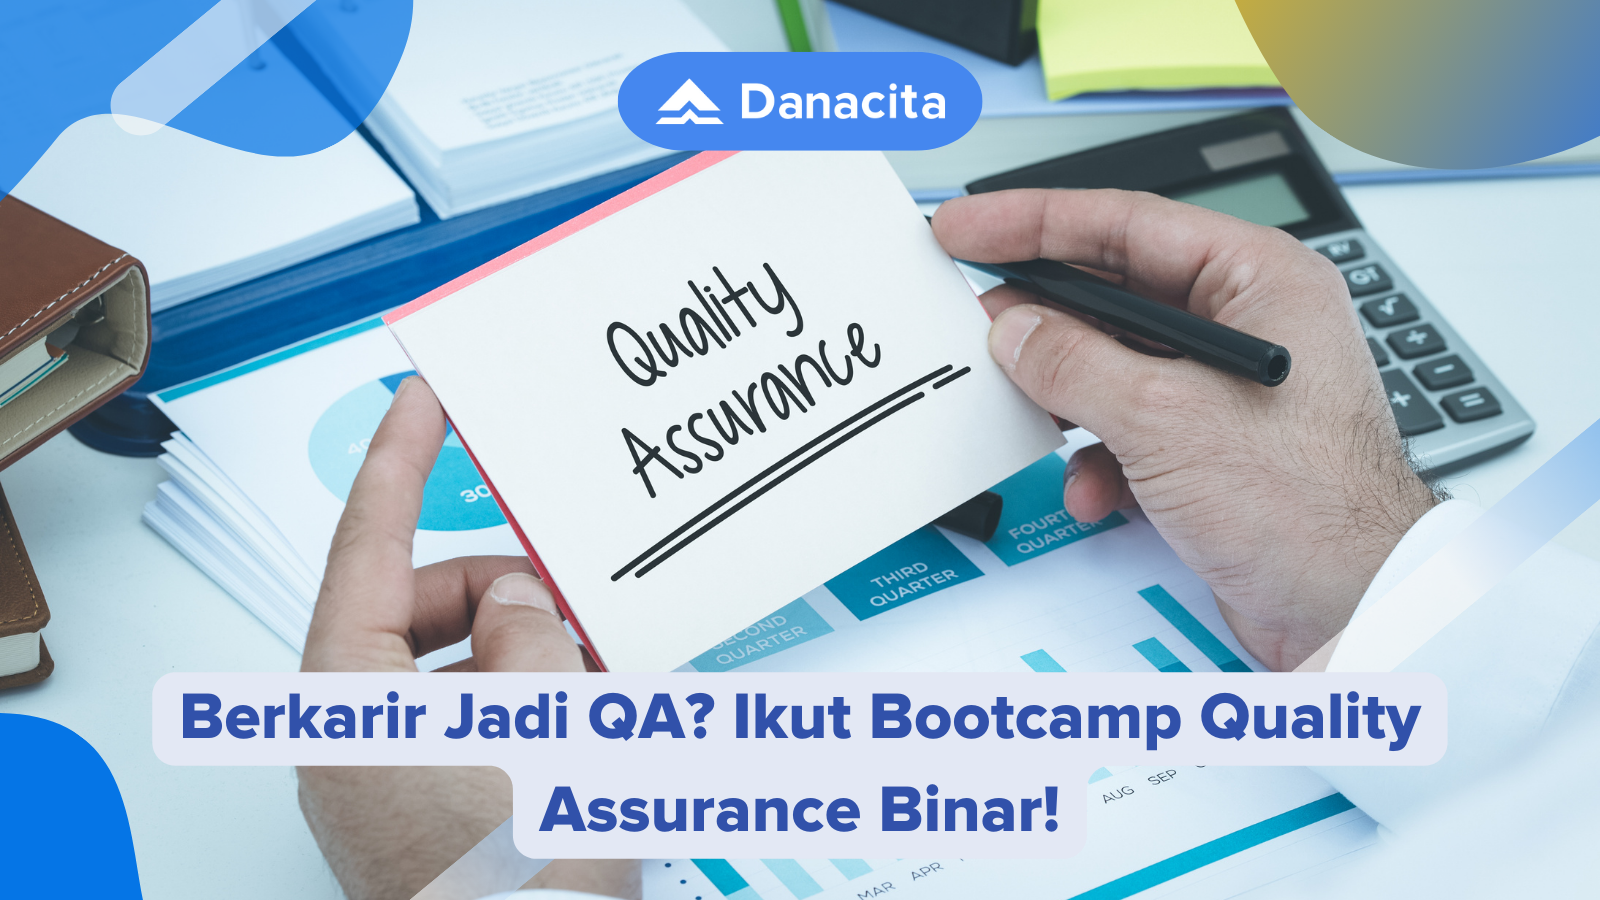 Bootcamp-Quality-Assurance-Binar